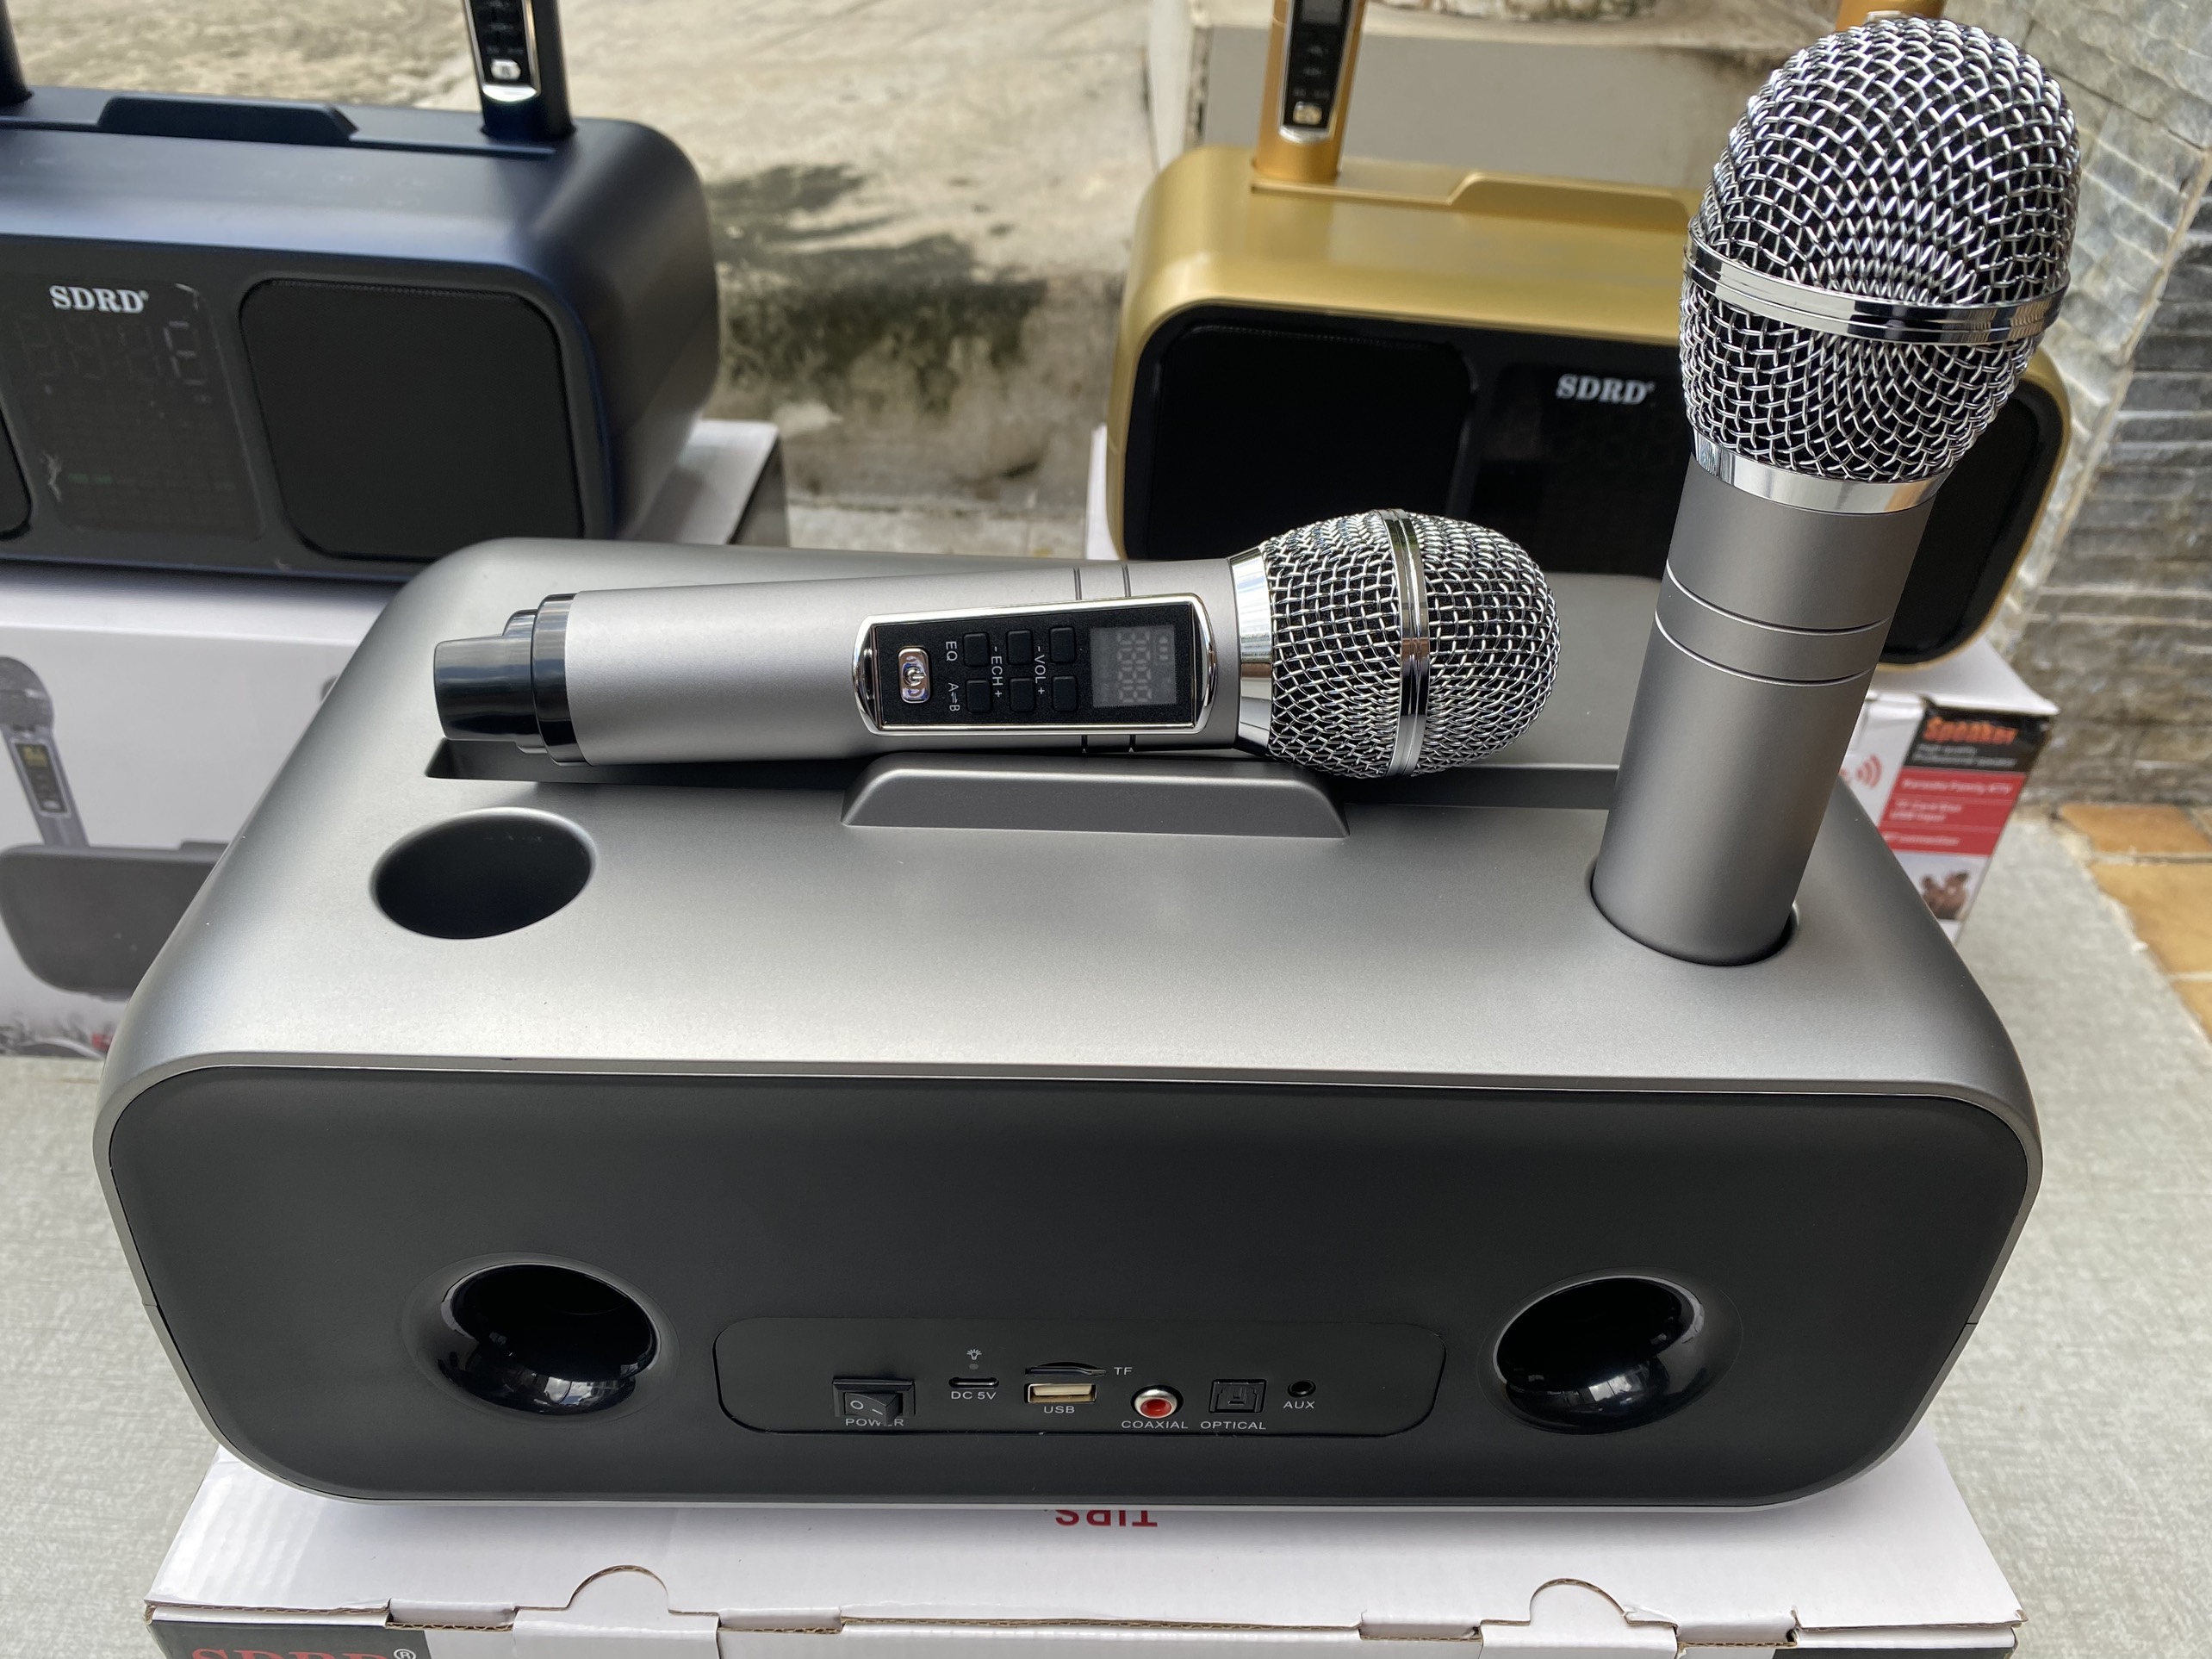 Loa karaoke SD-318 phiên bản cao cấp